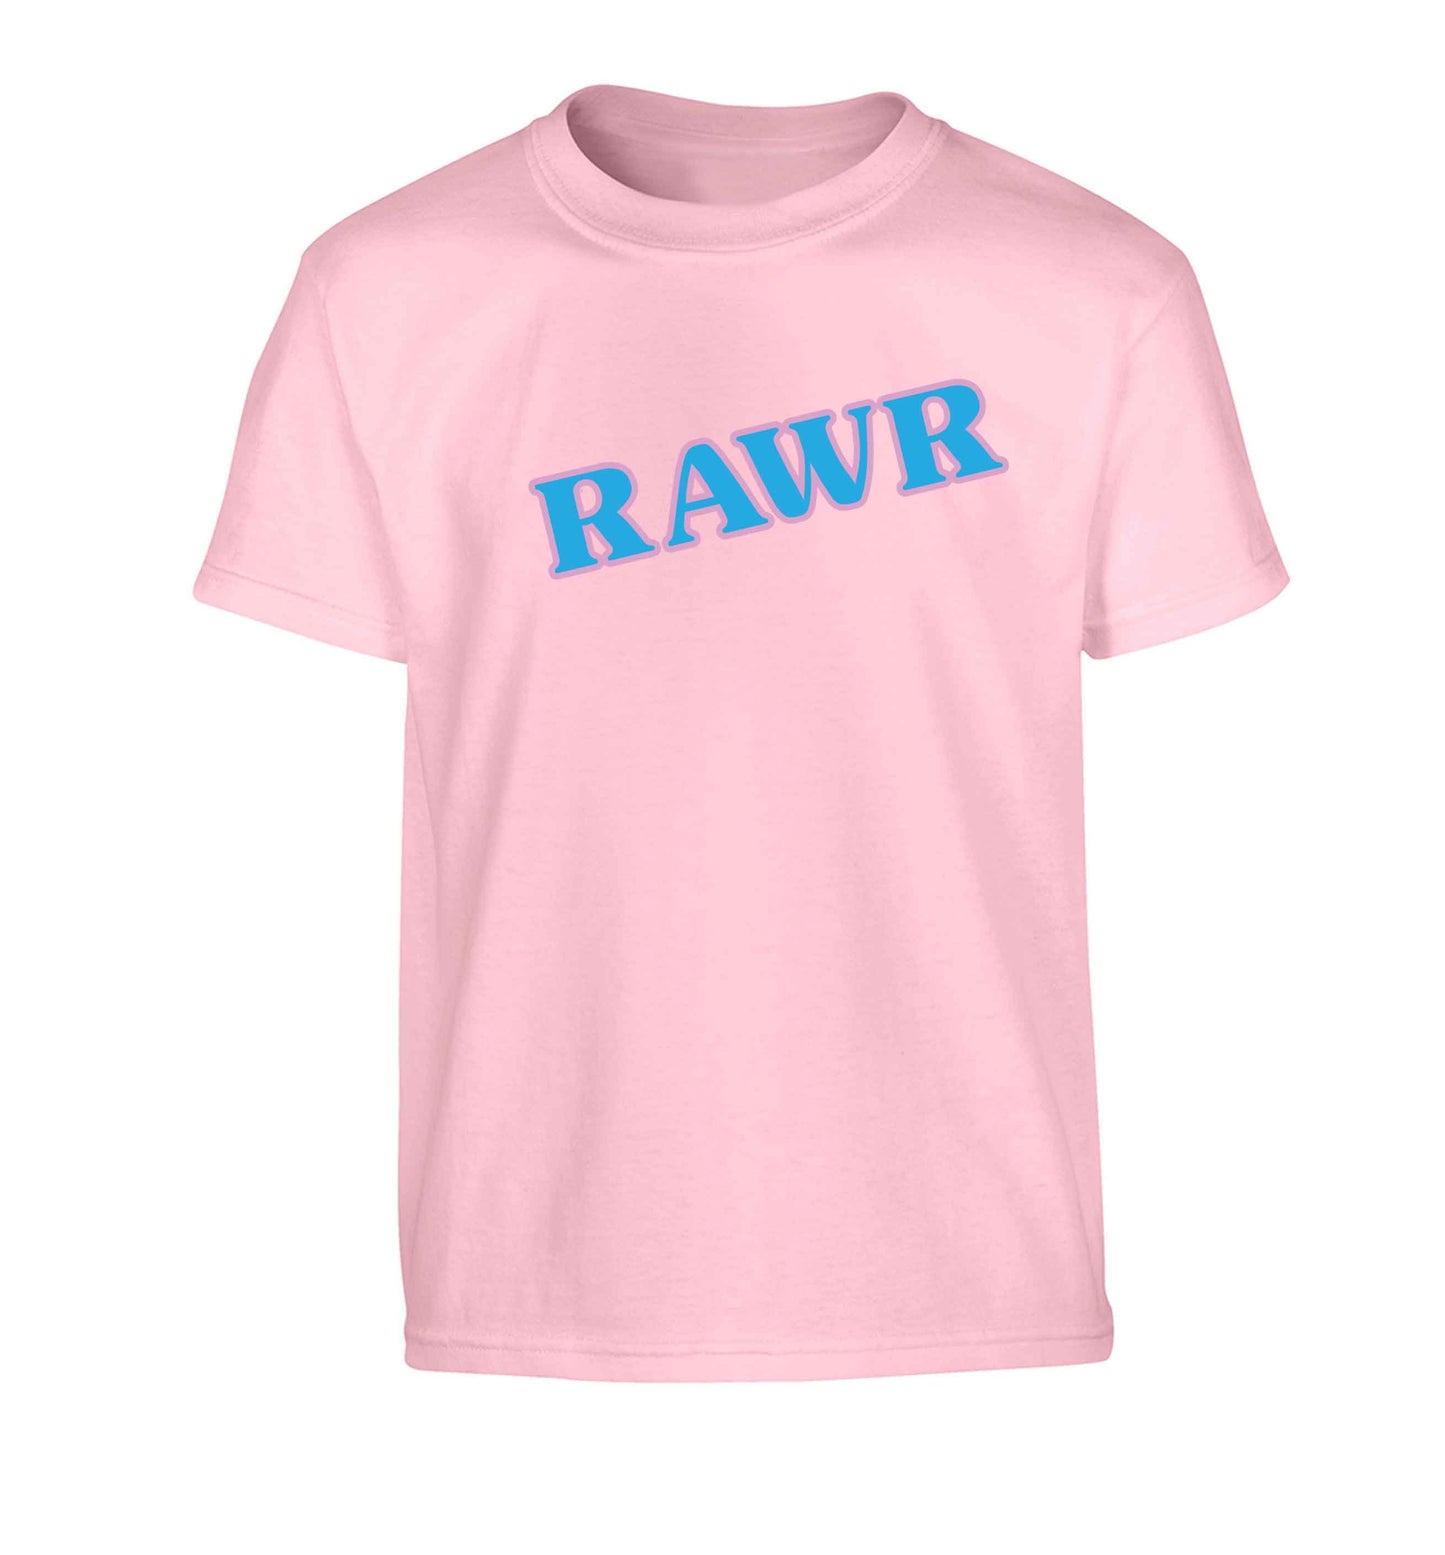 Rawr Children's light pink Tshirt 12-13 Years